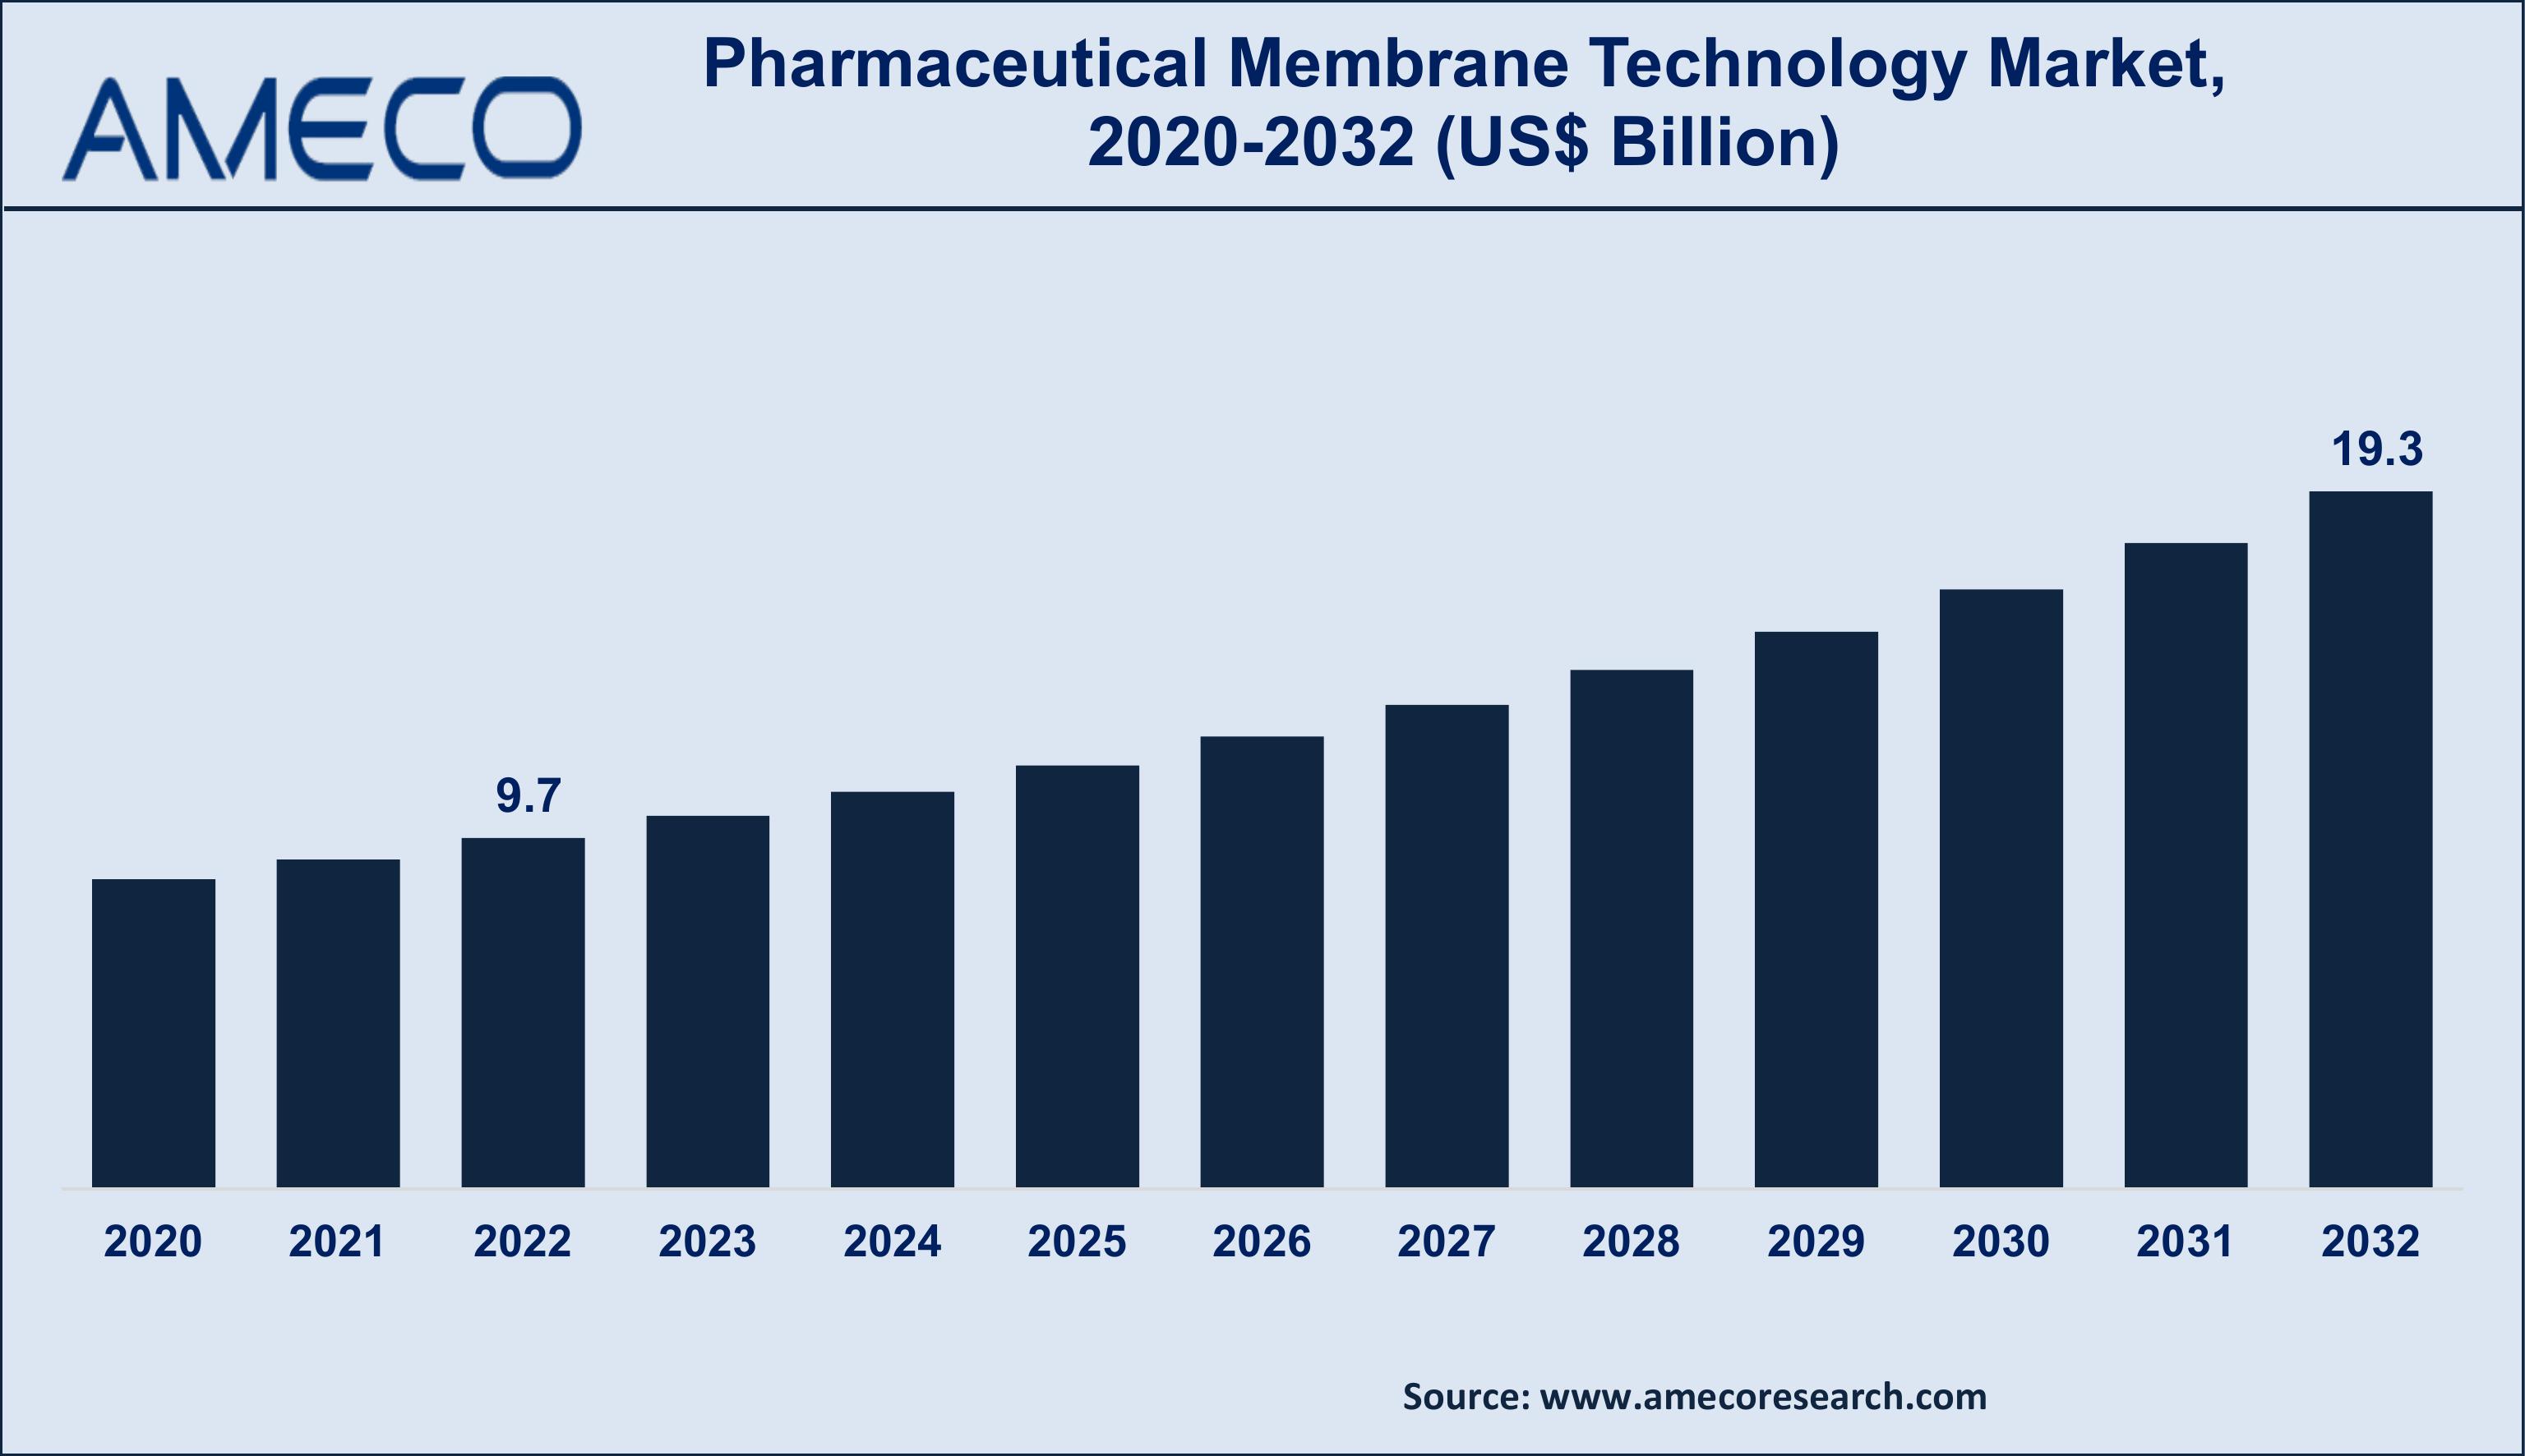 Pharmaceutical Membrane Technology Market Growth